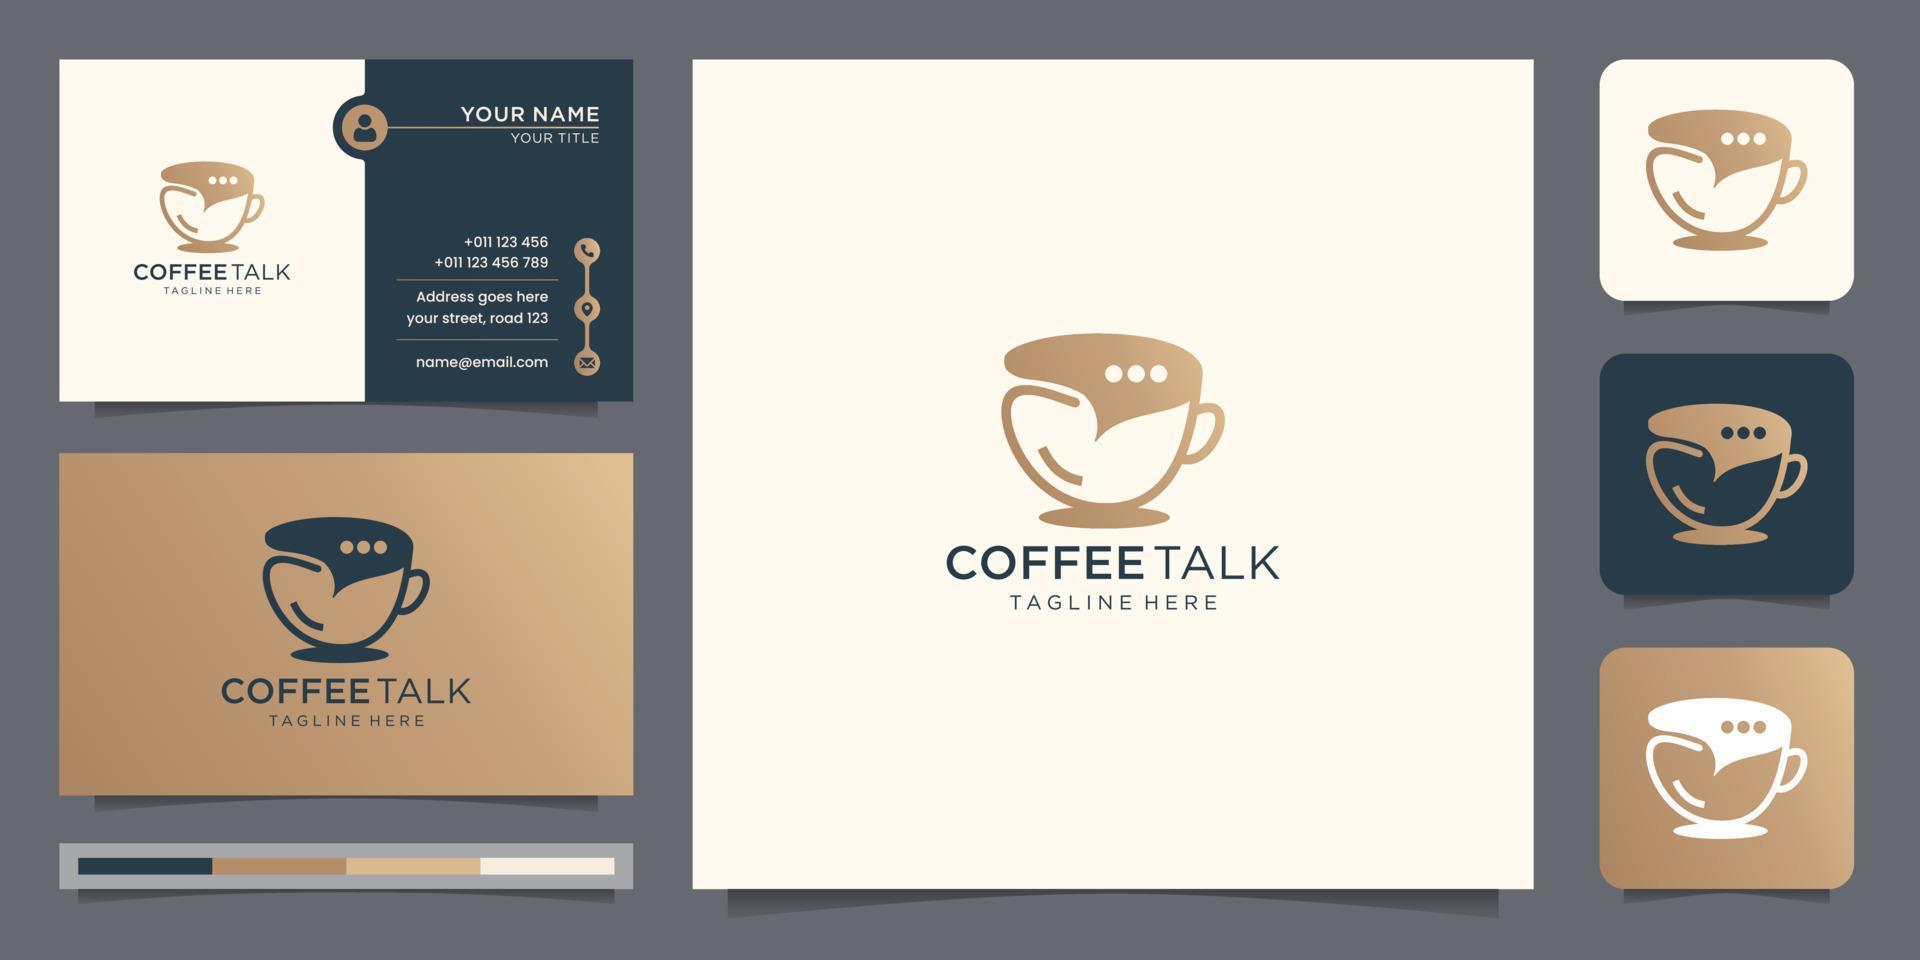 Minimalist coffee logo with chat talk design.creative concept line art style coffee talk inspiration vector